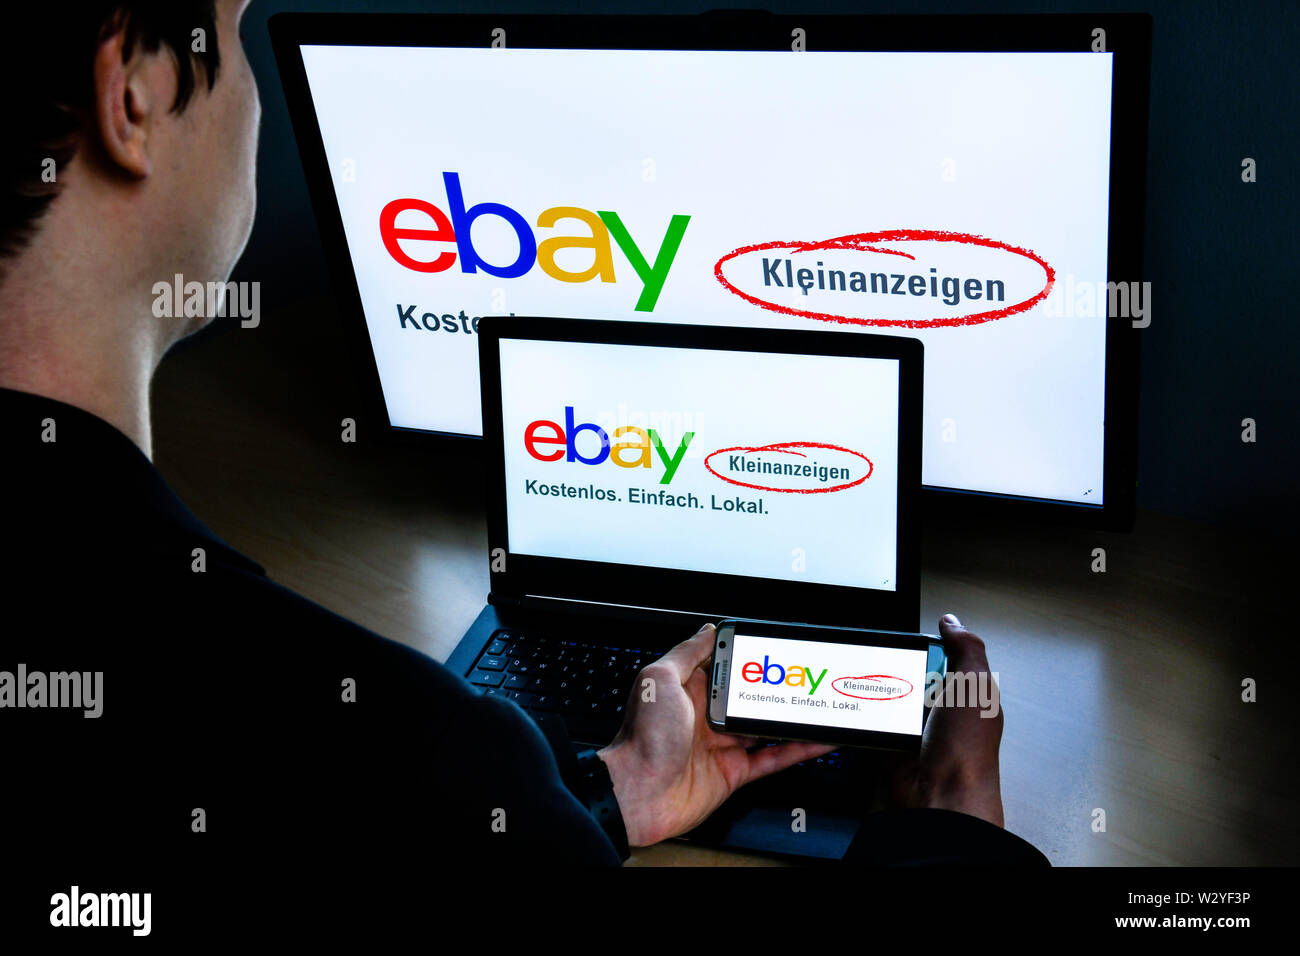 Ebay logotipo Kleinanzeigen Foto de stock